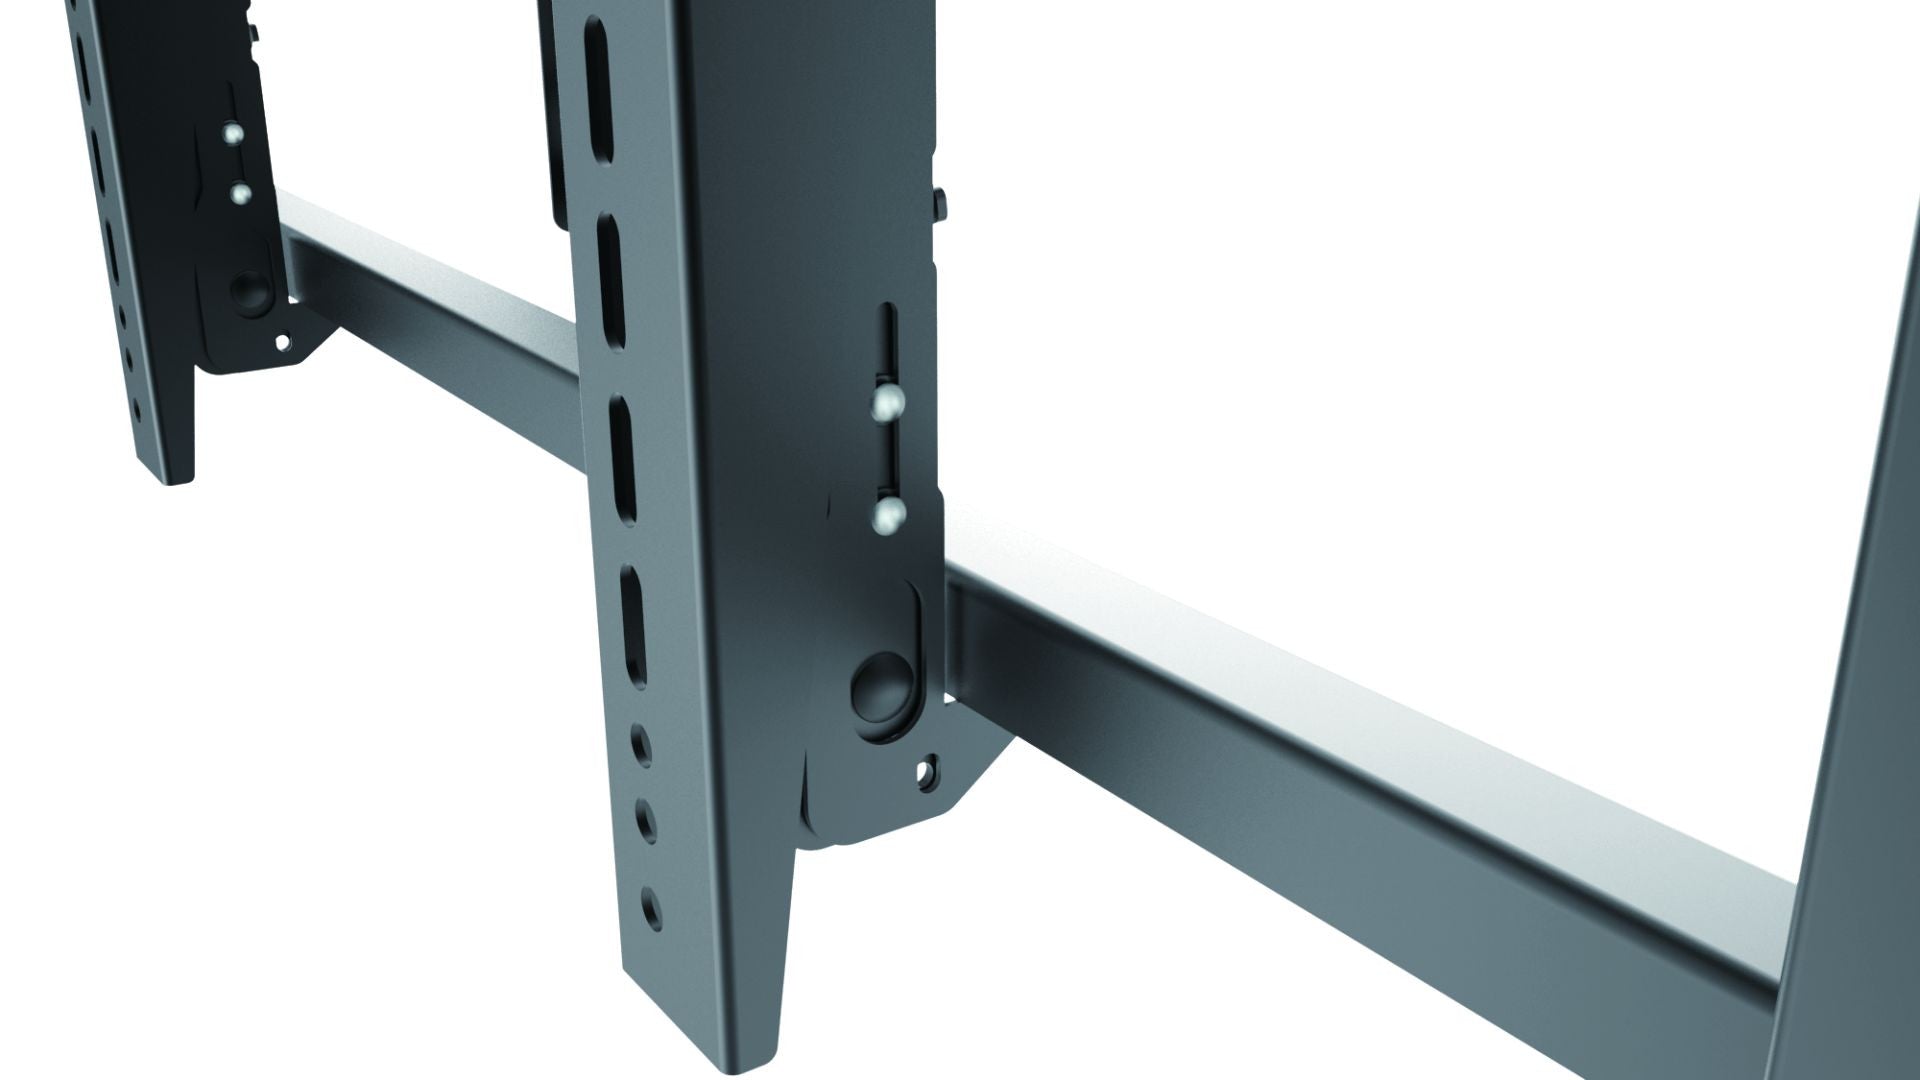 Detail of adjustable vertical attachment rail